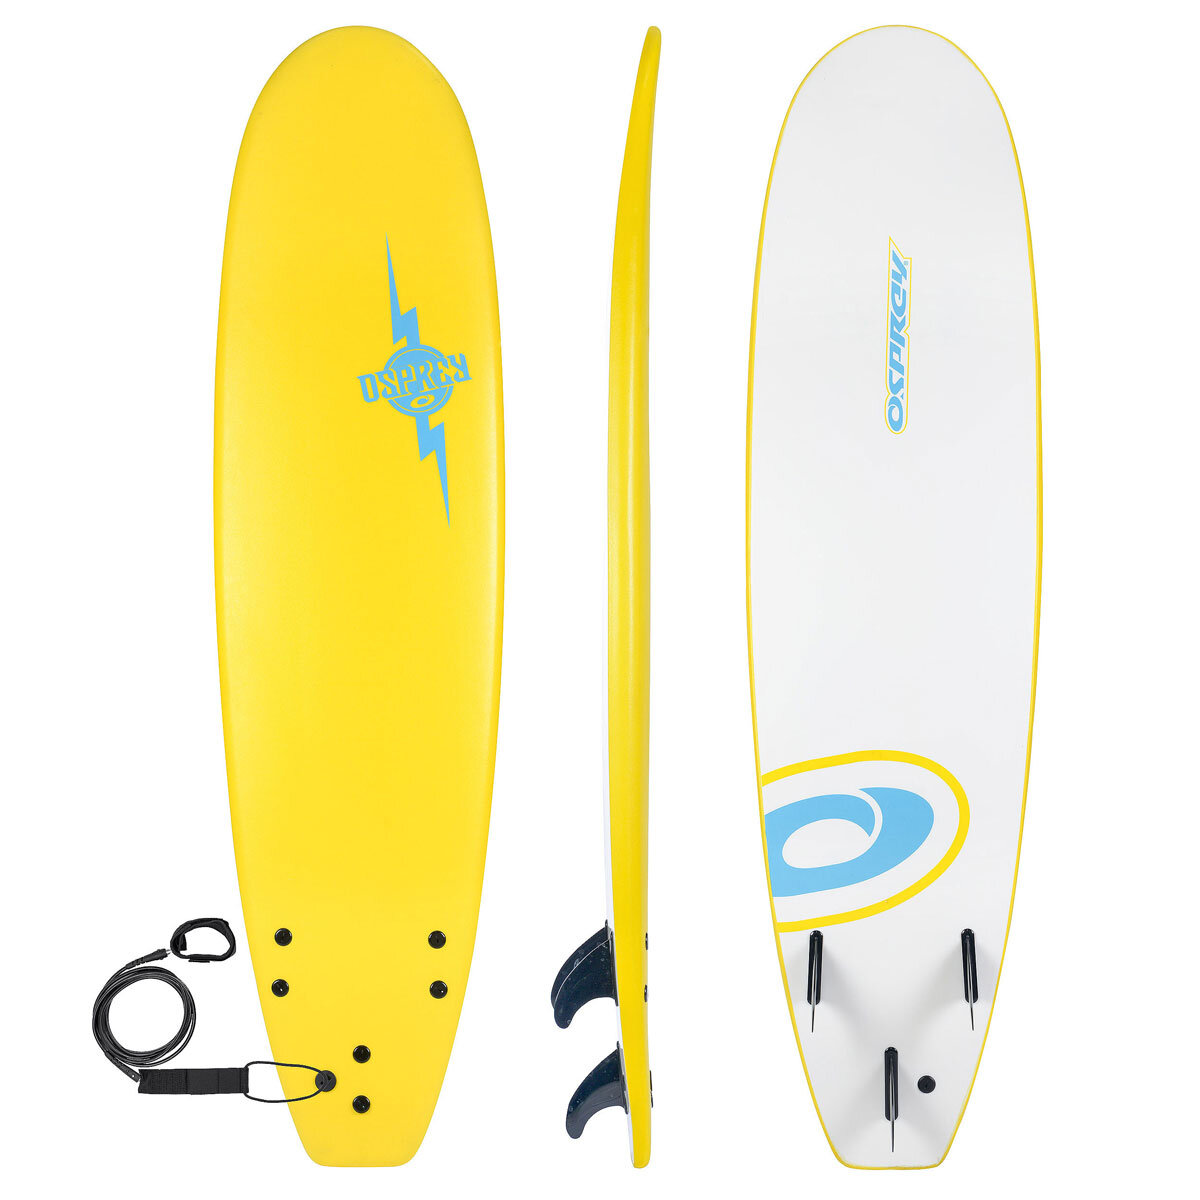 Lead image for Osprey 7ft Surfboard